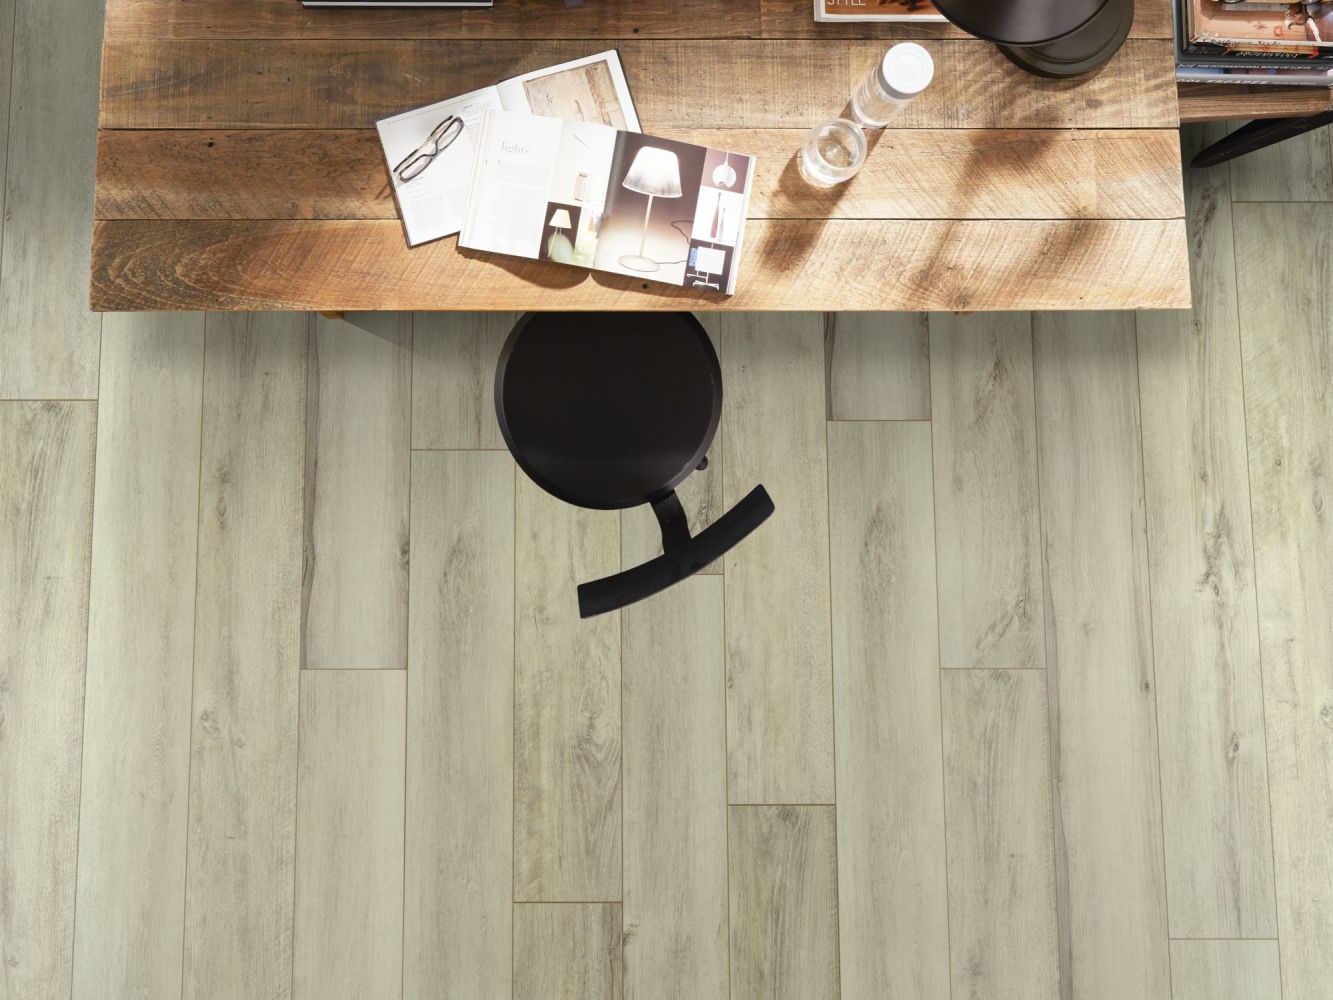 Shaw Floors Resilient Residential Paragon XL HD Plus Seashell White Oak 01028_2033V